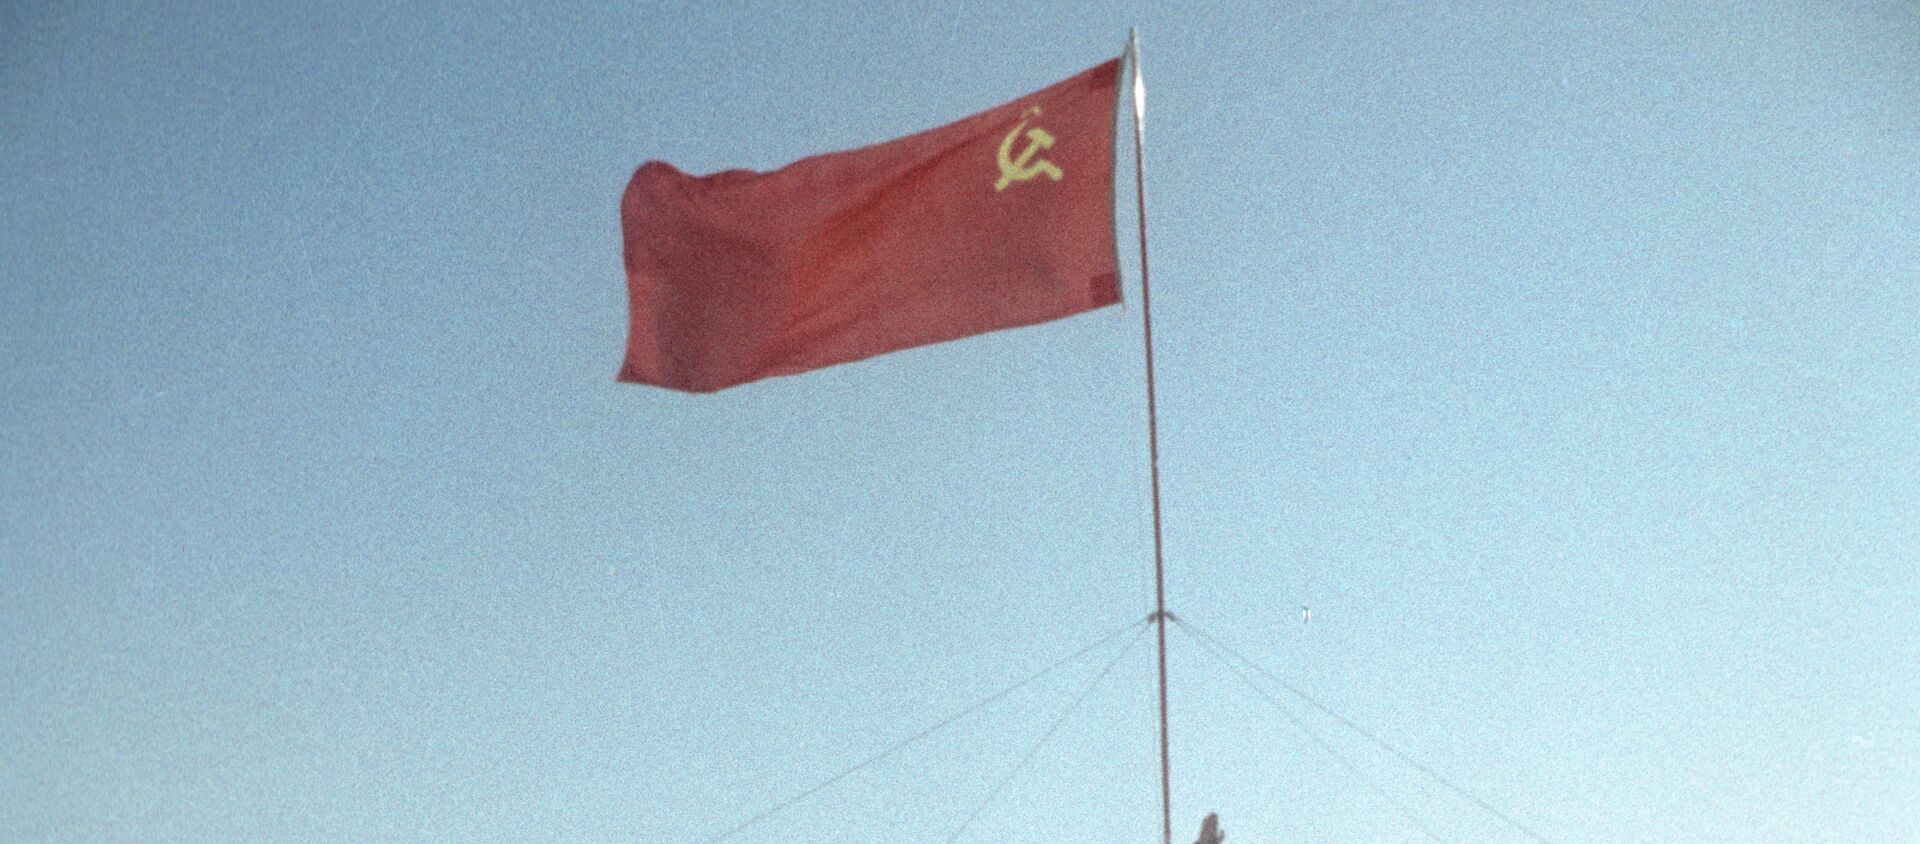 La bandera de la URSS (imagen referencial) - Sputnik Mundo, 1920, 19.12.2018